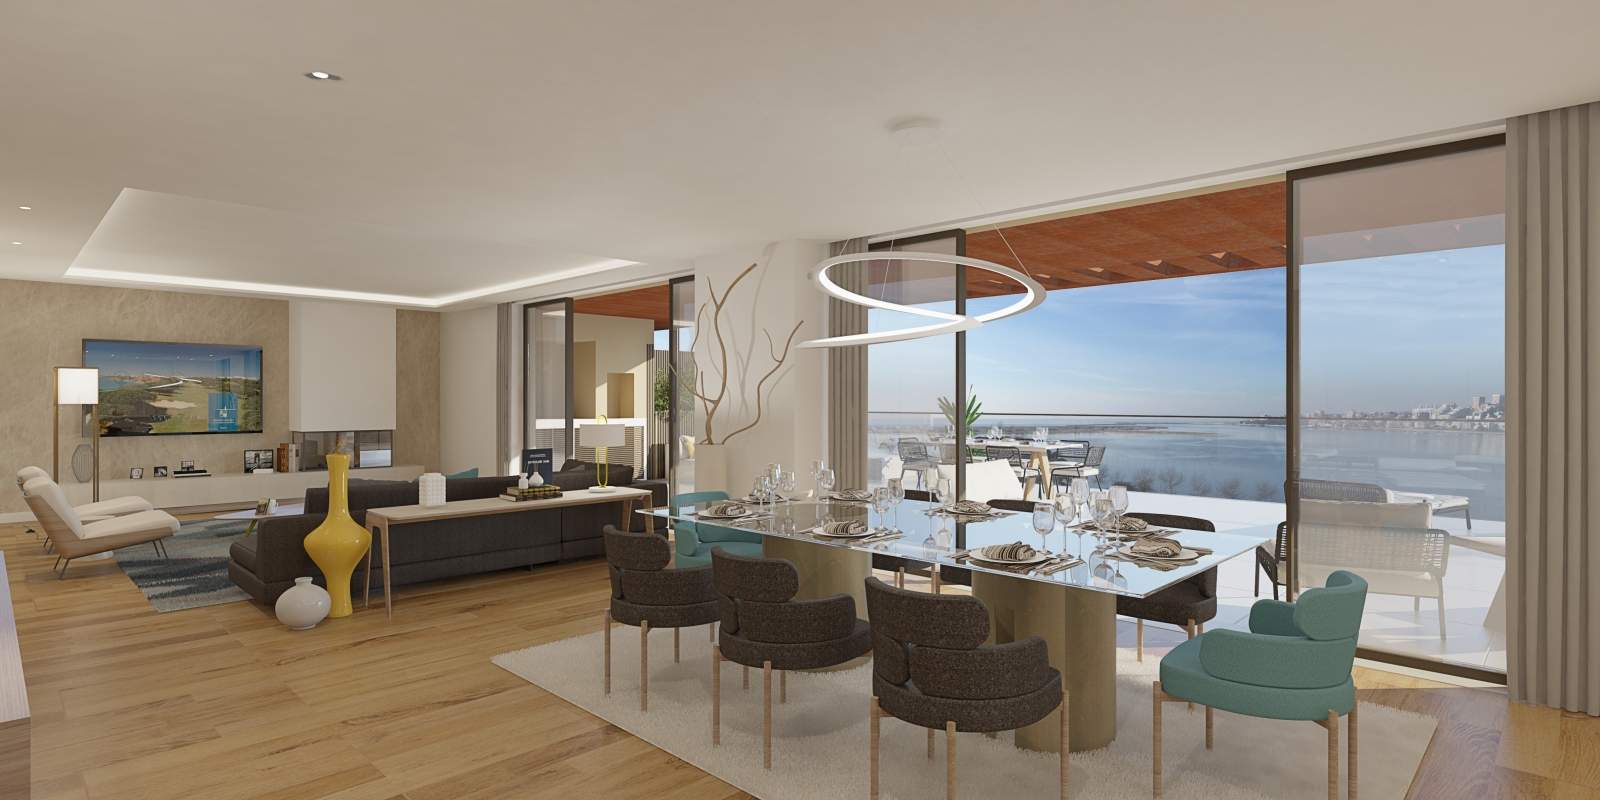 Apartment for sale with terrace, in exclusive condominium, V. N. Gaia, Porto, Portugal_175759